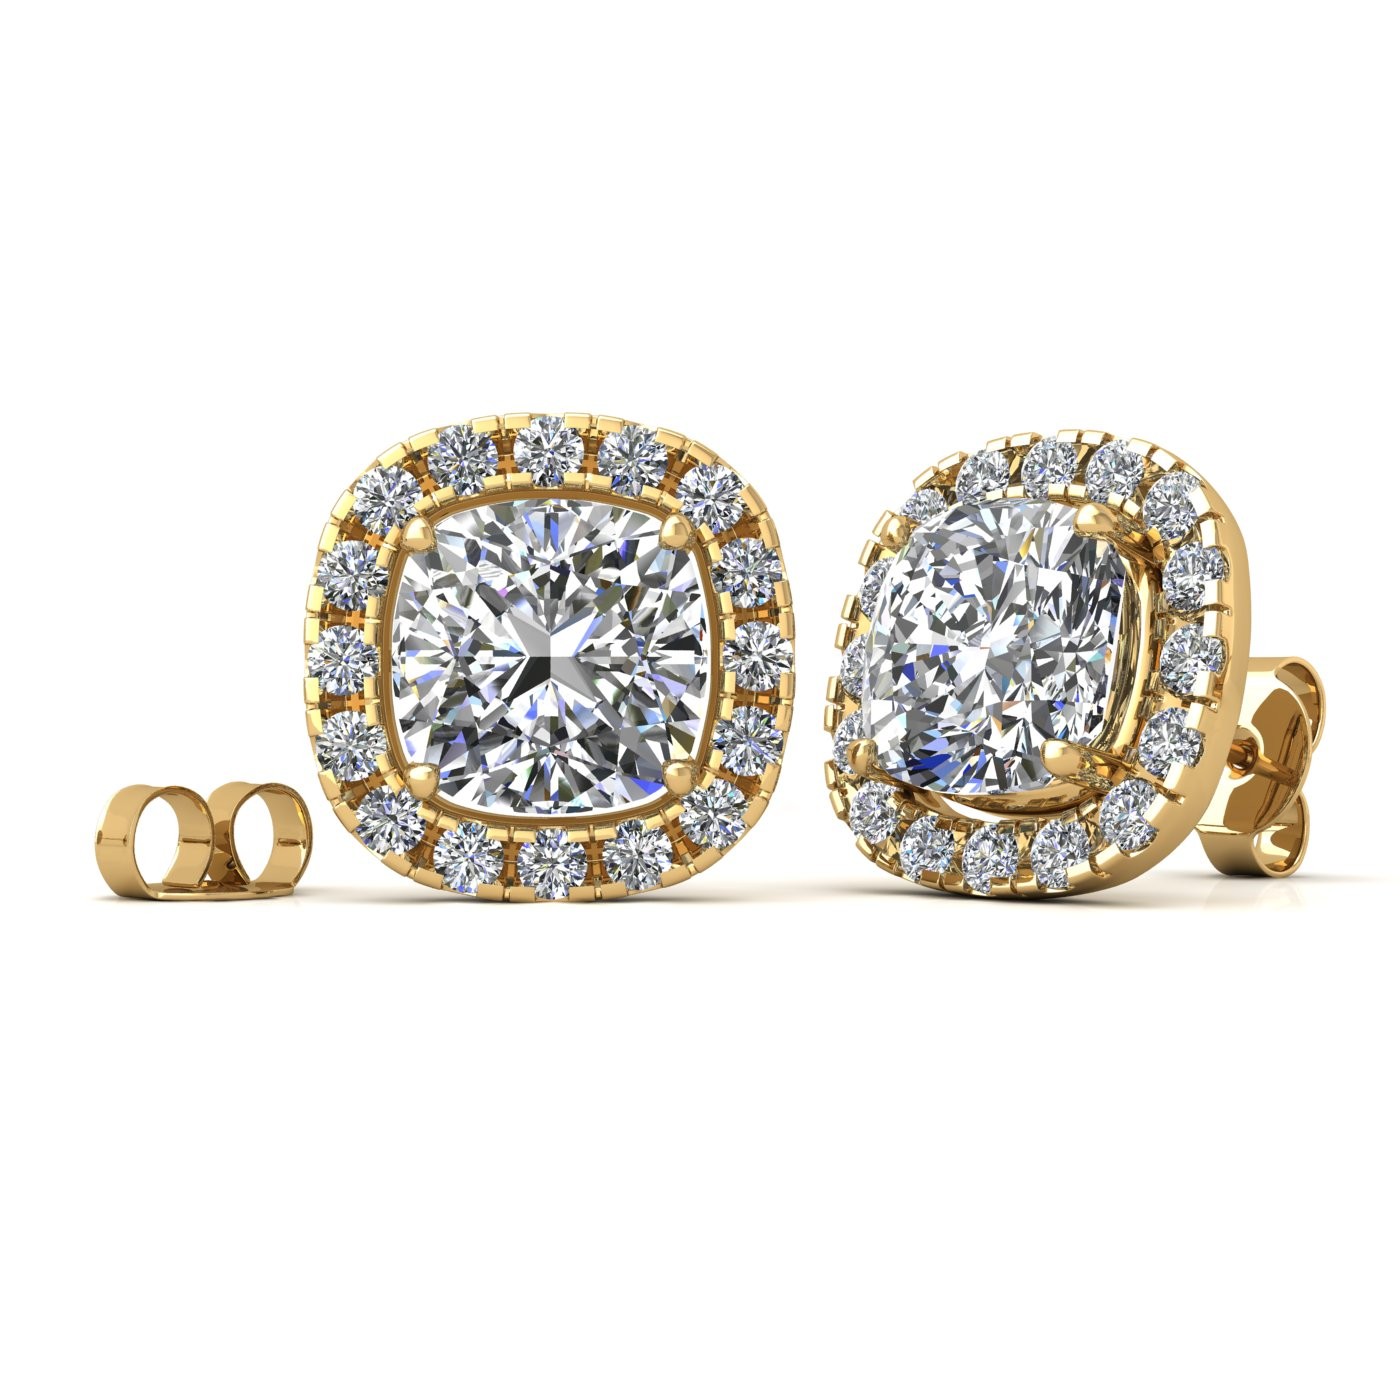 18k yellow gold  2,0 ct each (4,0 tcw) 4 prongs cushion shape diamond earrings with diamond pavÉ set halo Photos & images